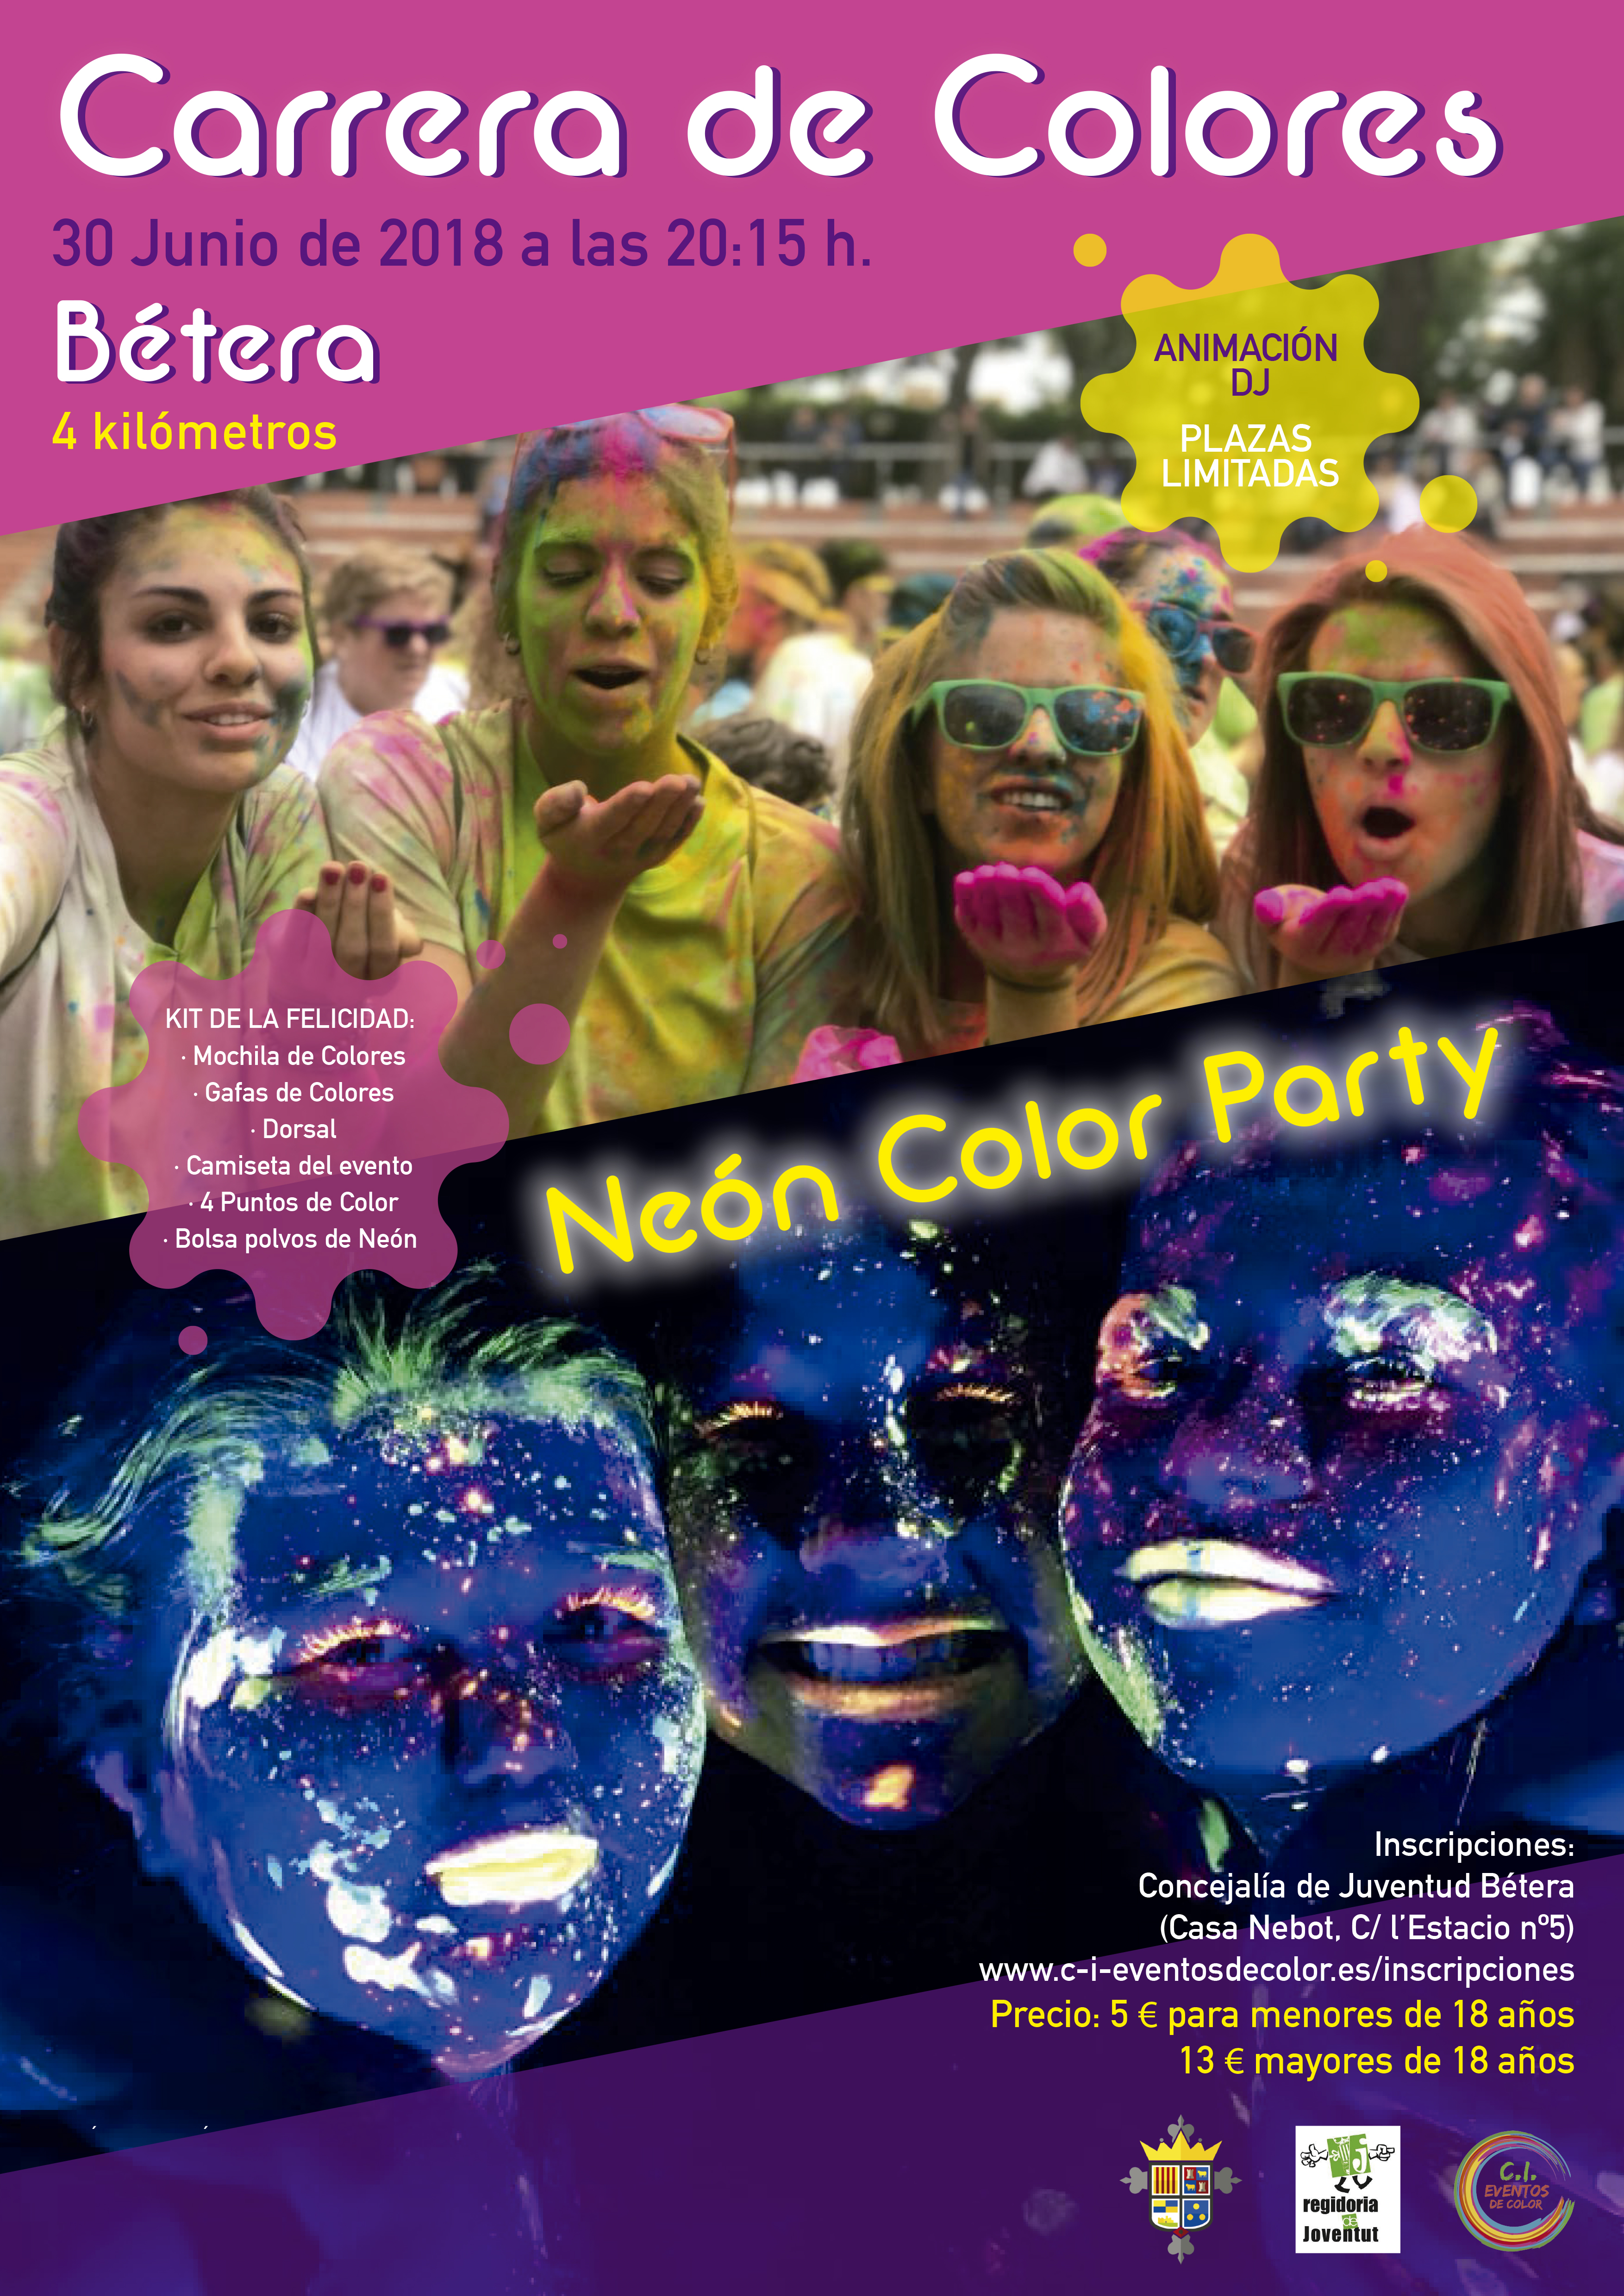 Carrera de Colores Bétera + Neón Color Party – c-i-eventosdecolor